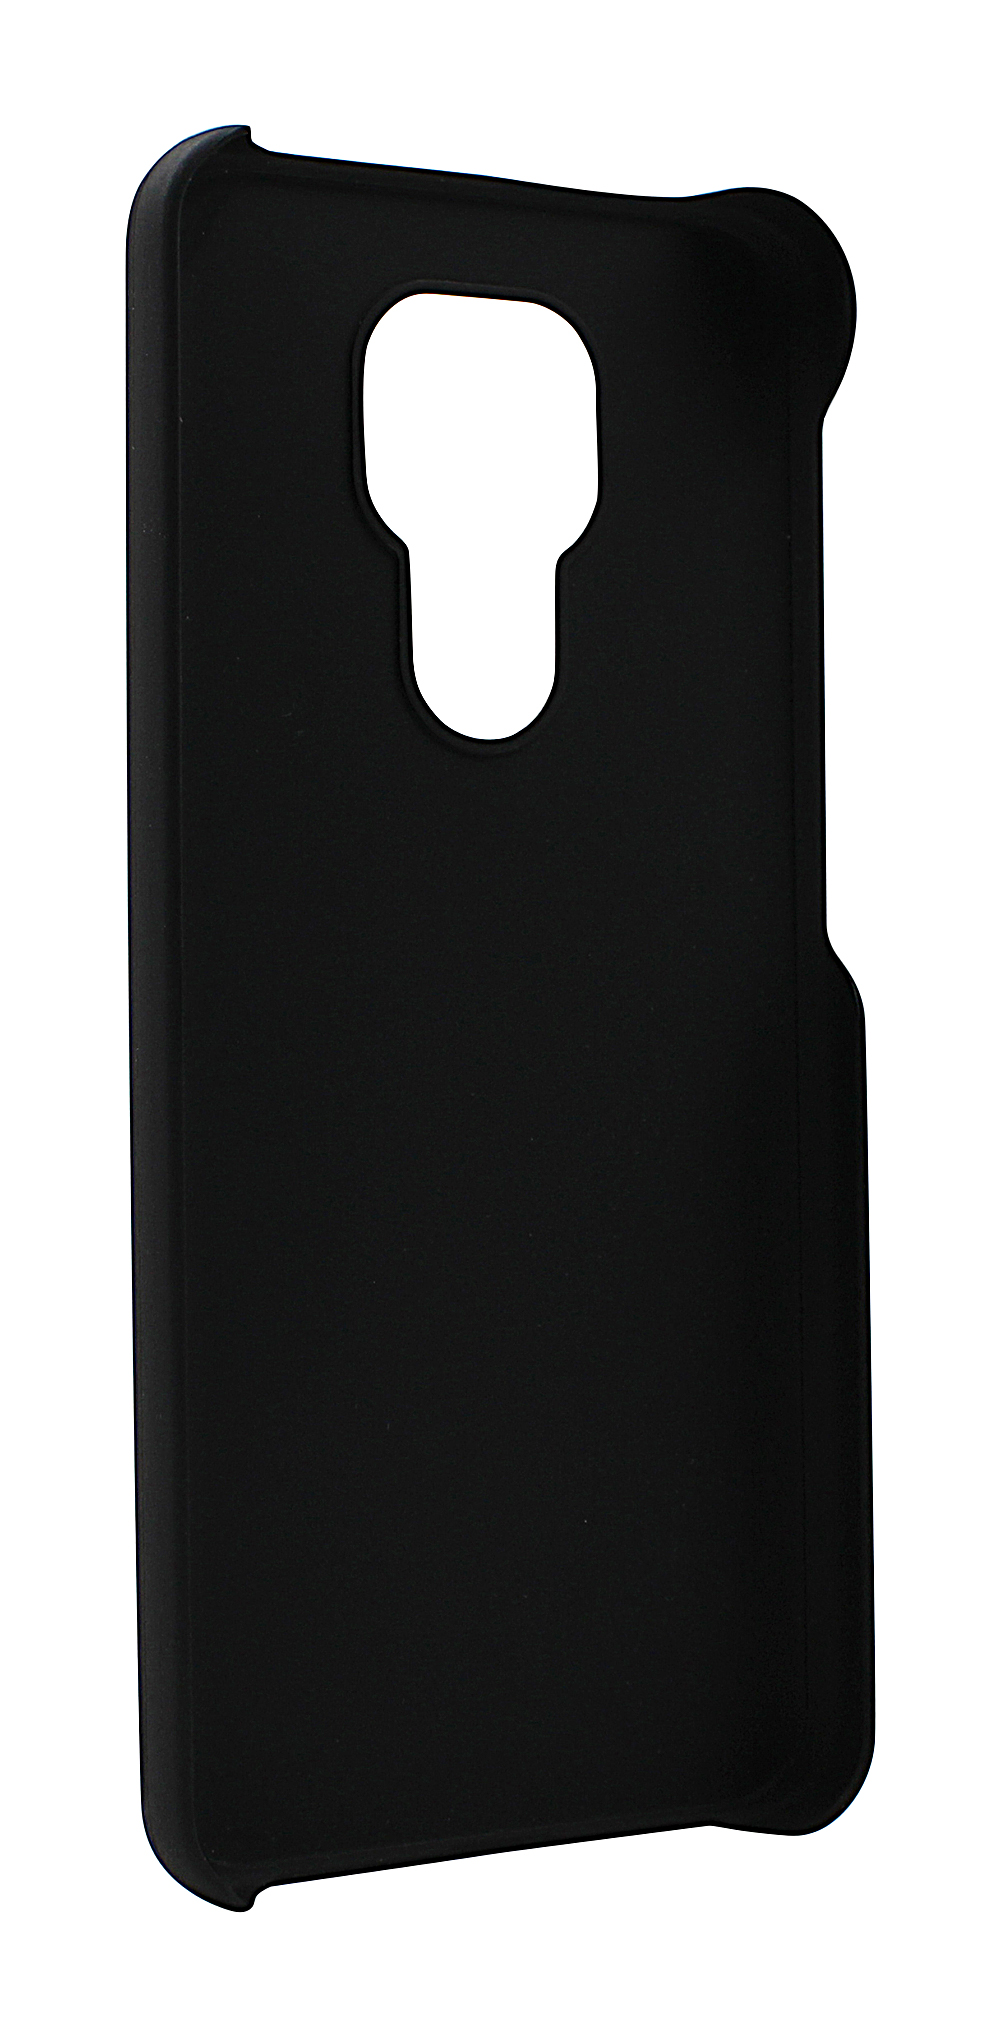 CoverInSkimblocker Magnet Fodral Motorola Moto G9 Play